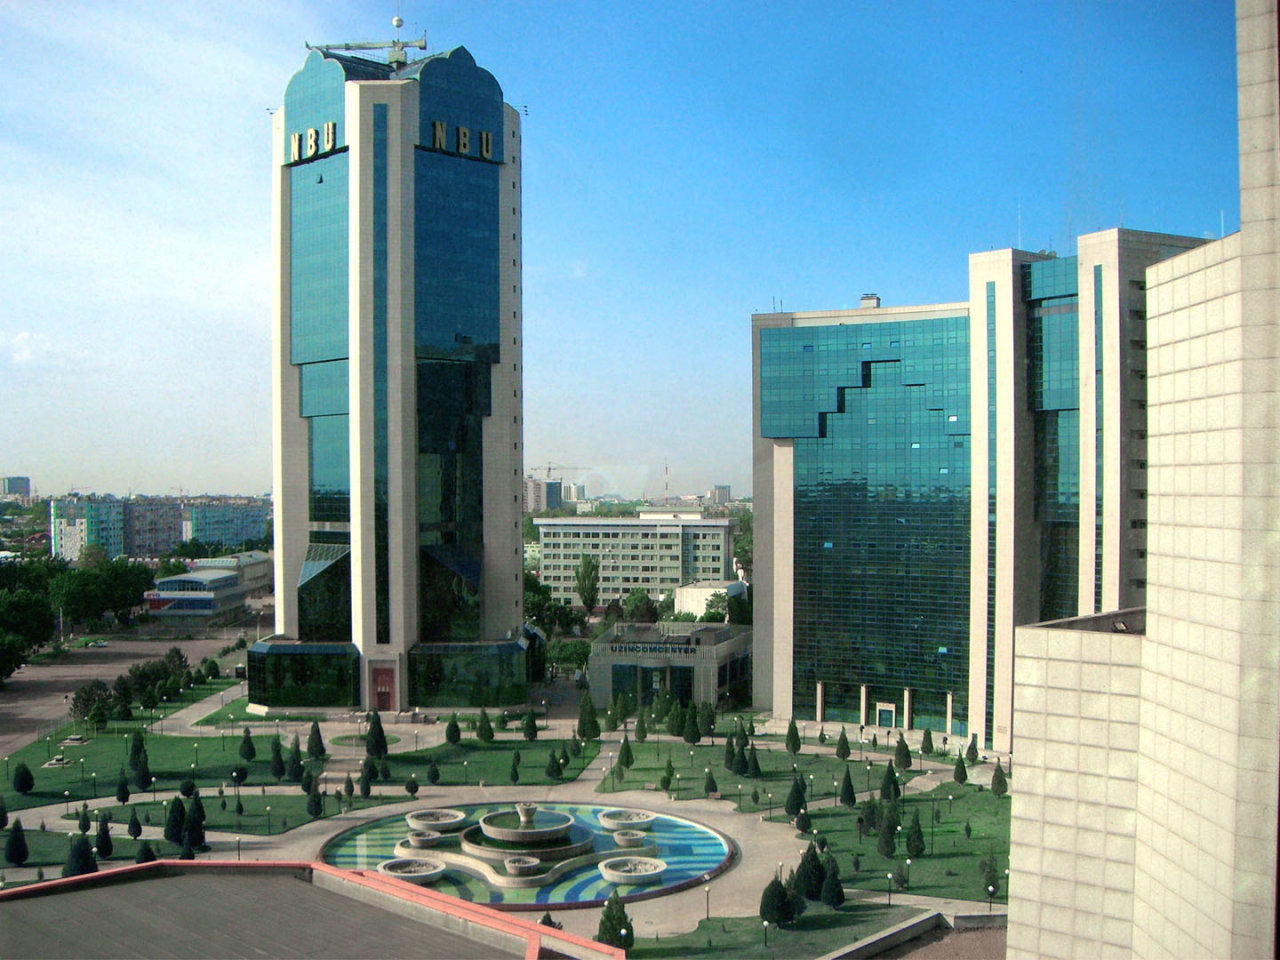 Uzbek National Bank, French Natixis bank sign two agreements worth 500M euros